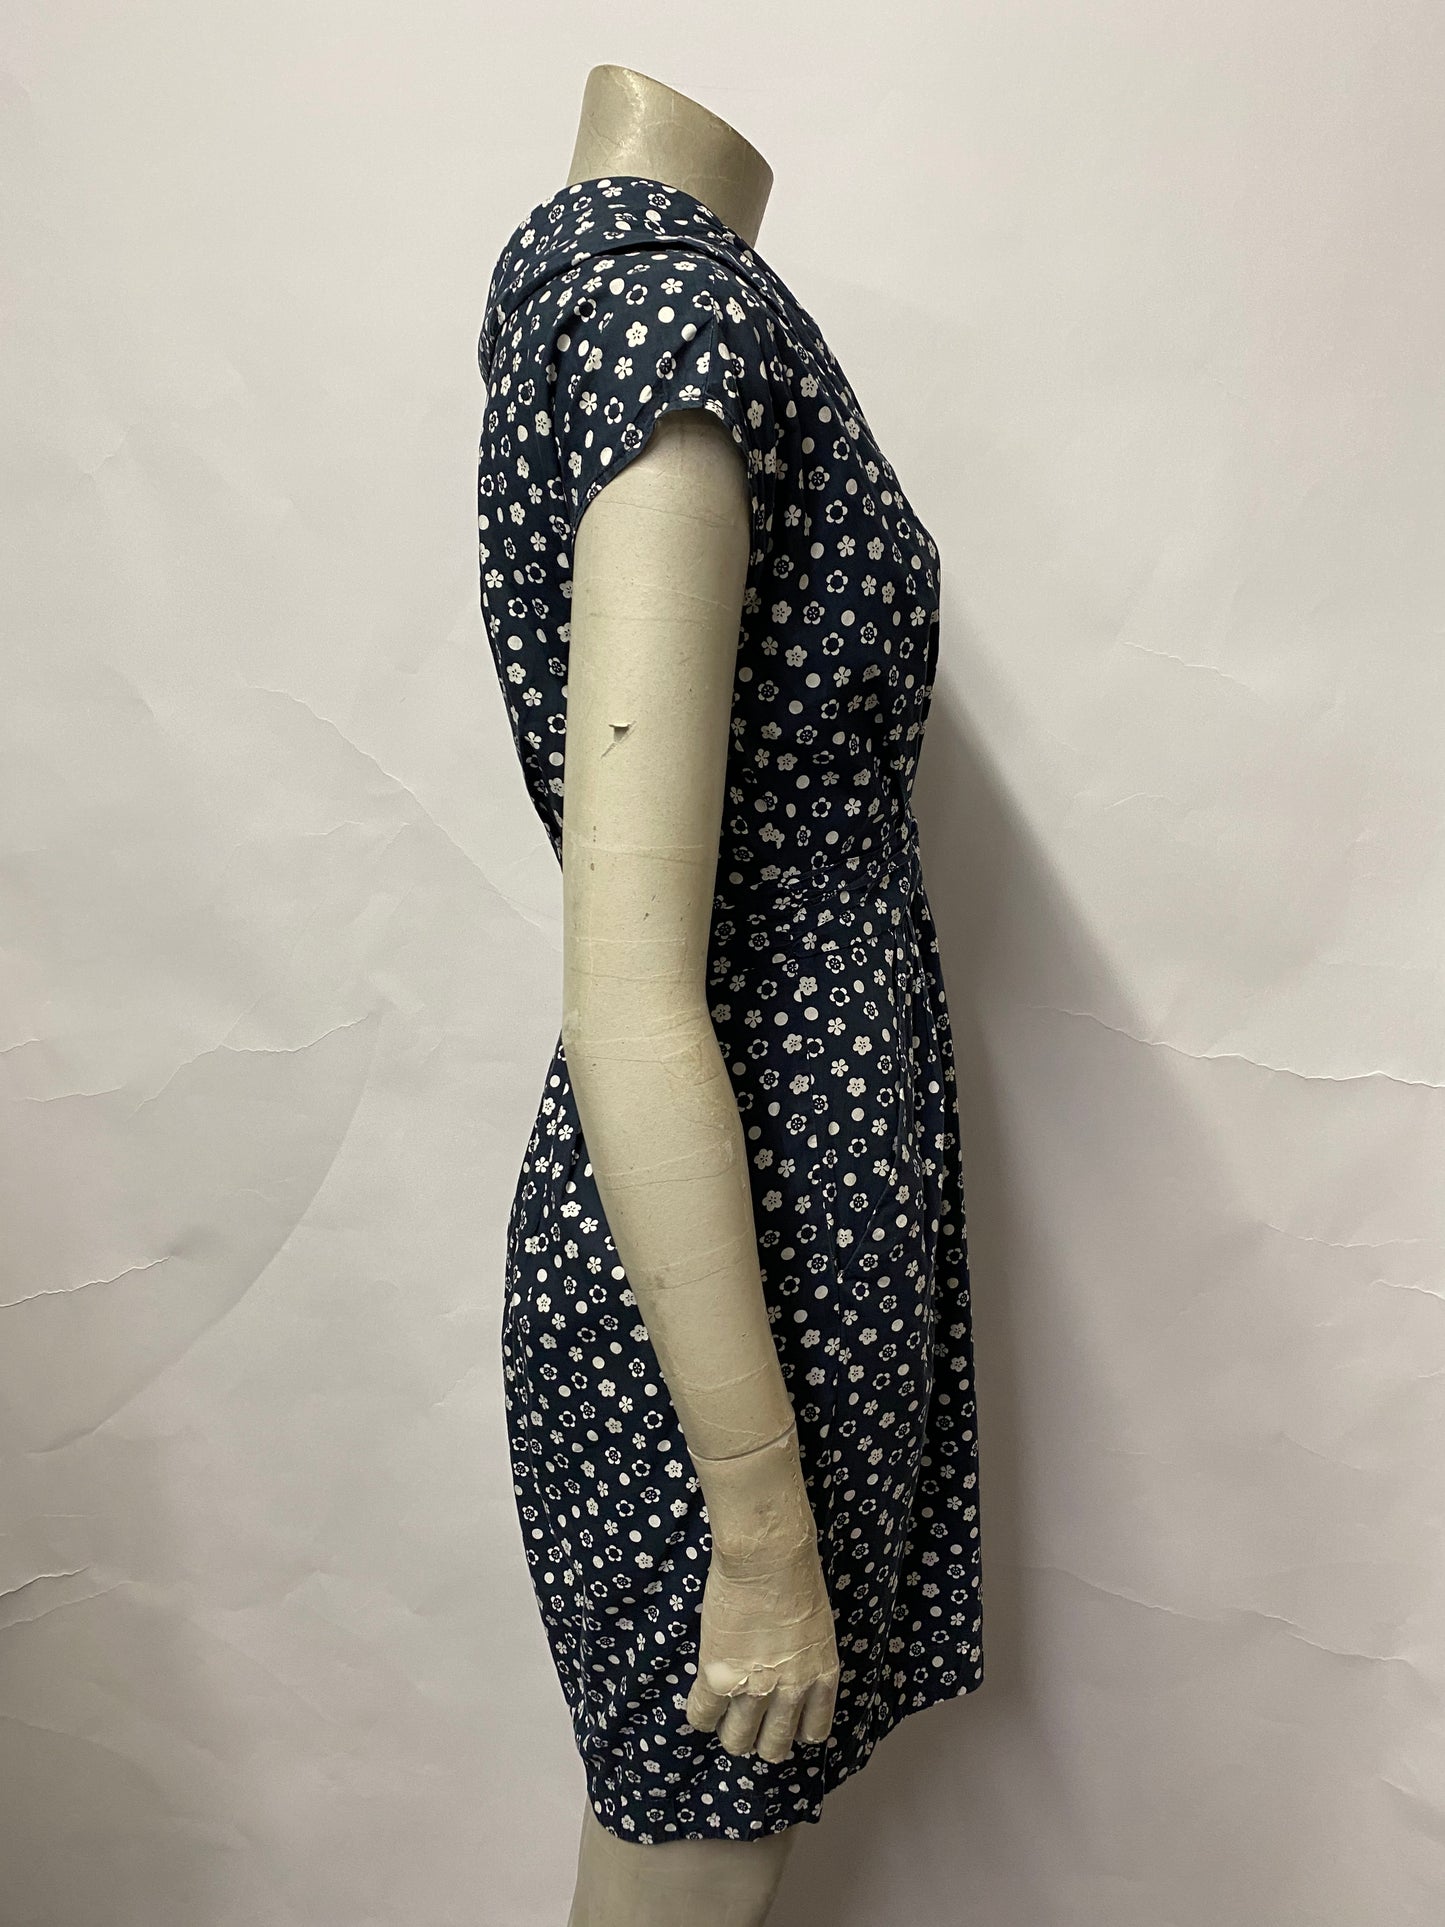 Nicole Farhi Blue Flower Print Cotton Dress 10